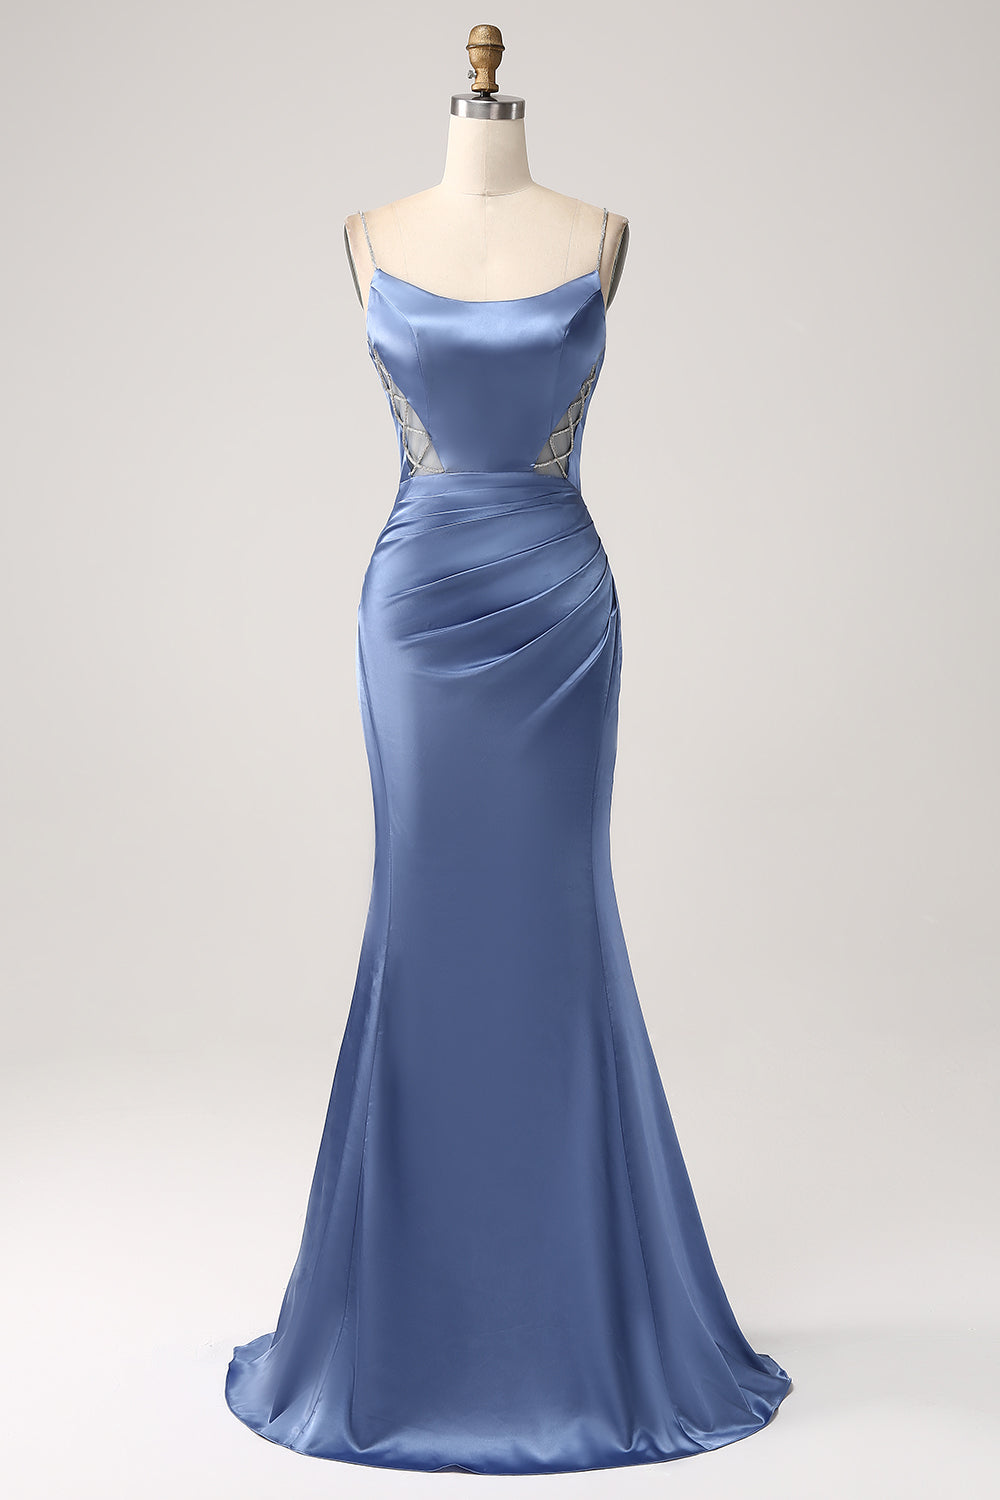 Sirène gris bleu Satin Spaghetti Bretelles Longue robe de Soirée